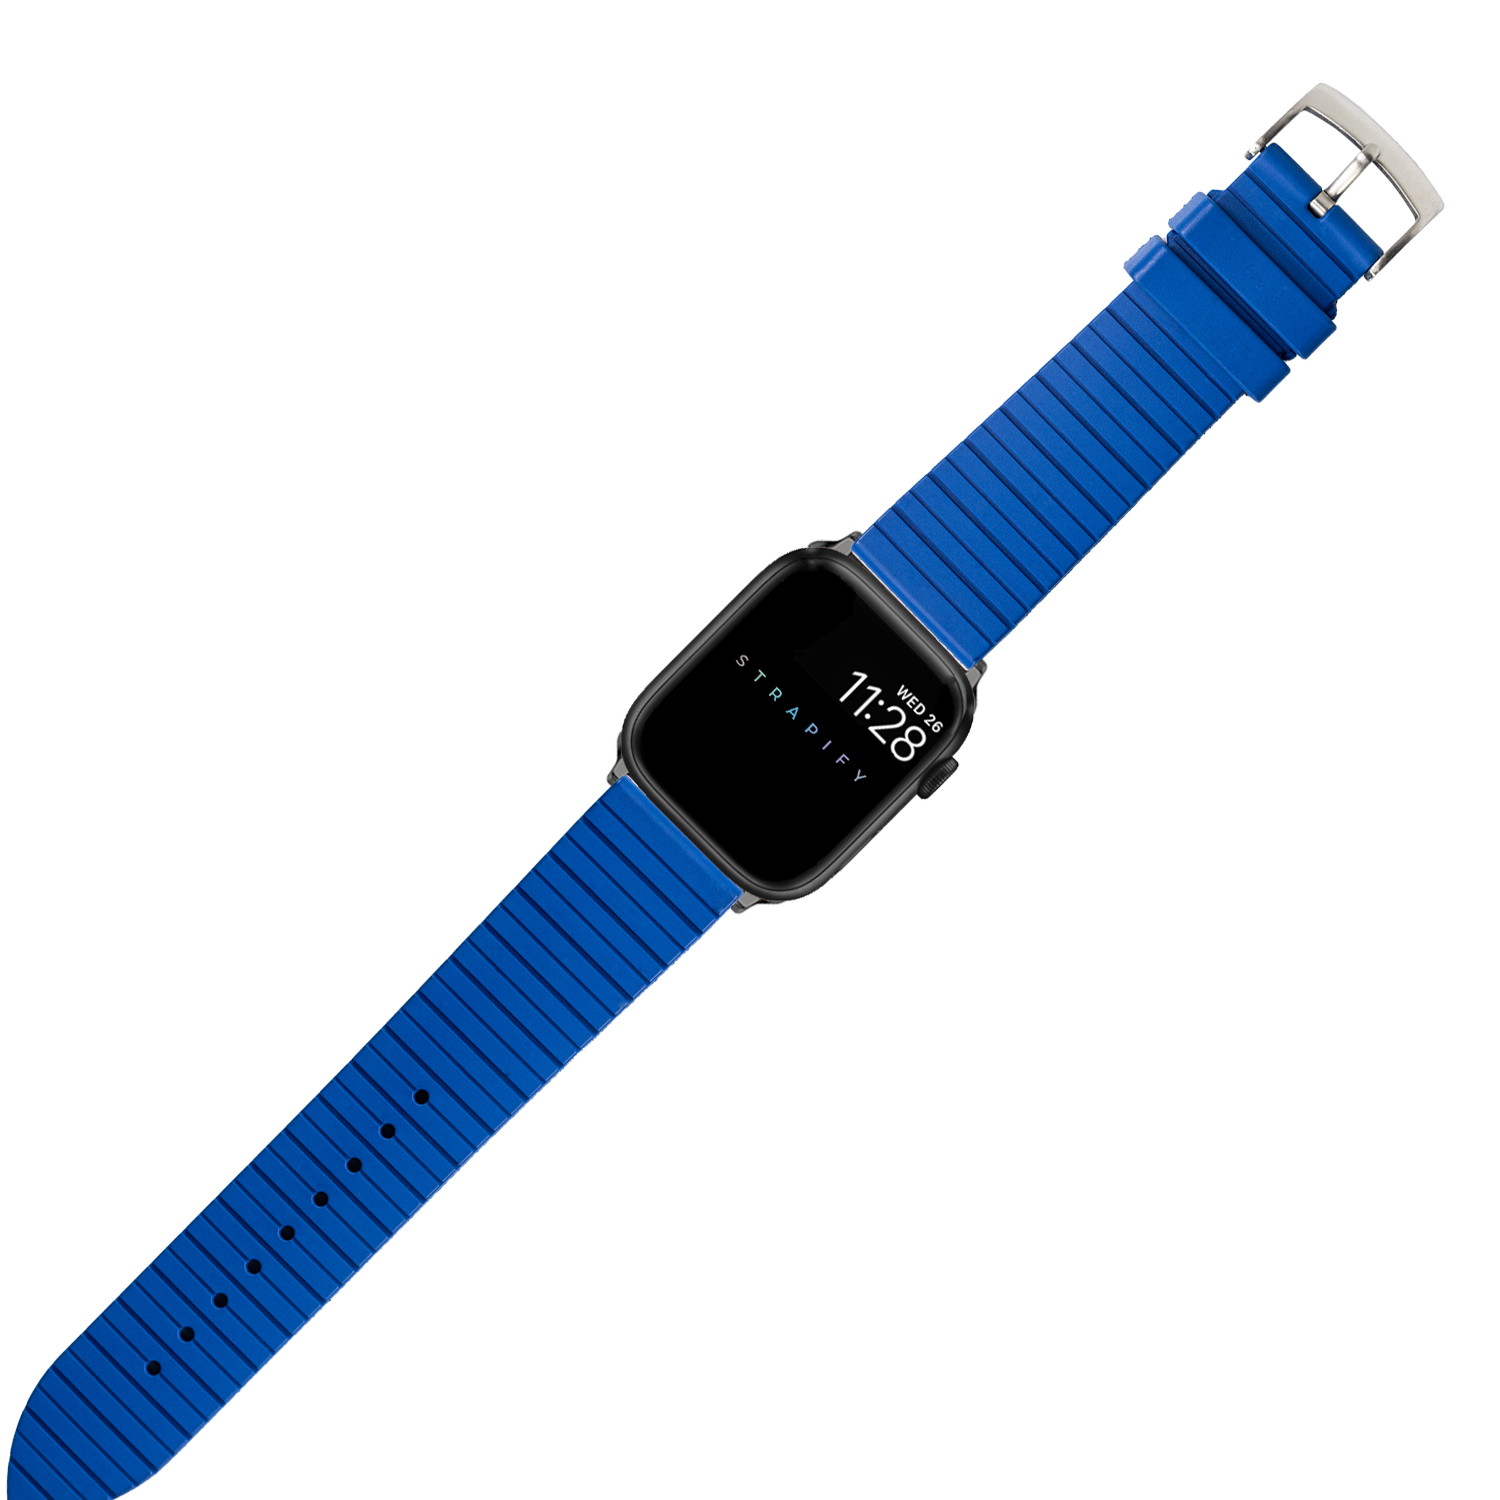 [Apple Watch] King Panelarc FKM Rubber - Royal Blue